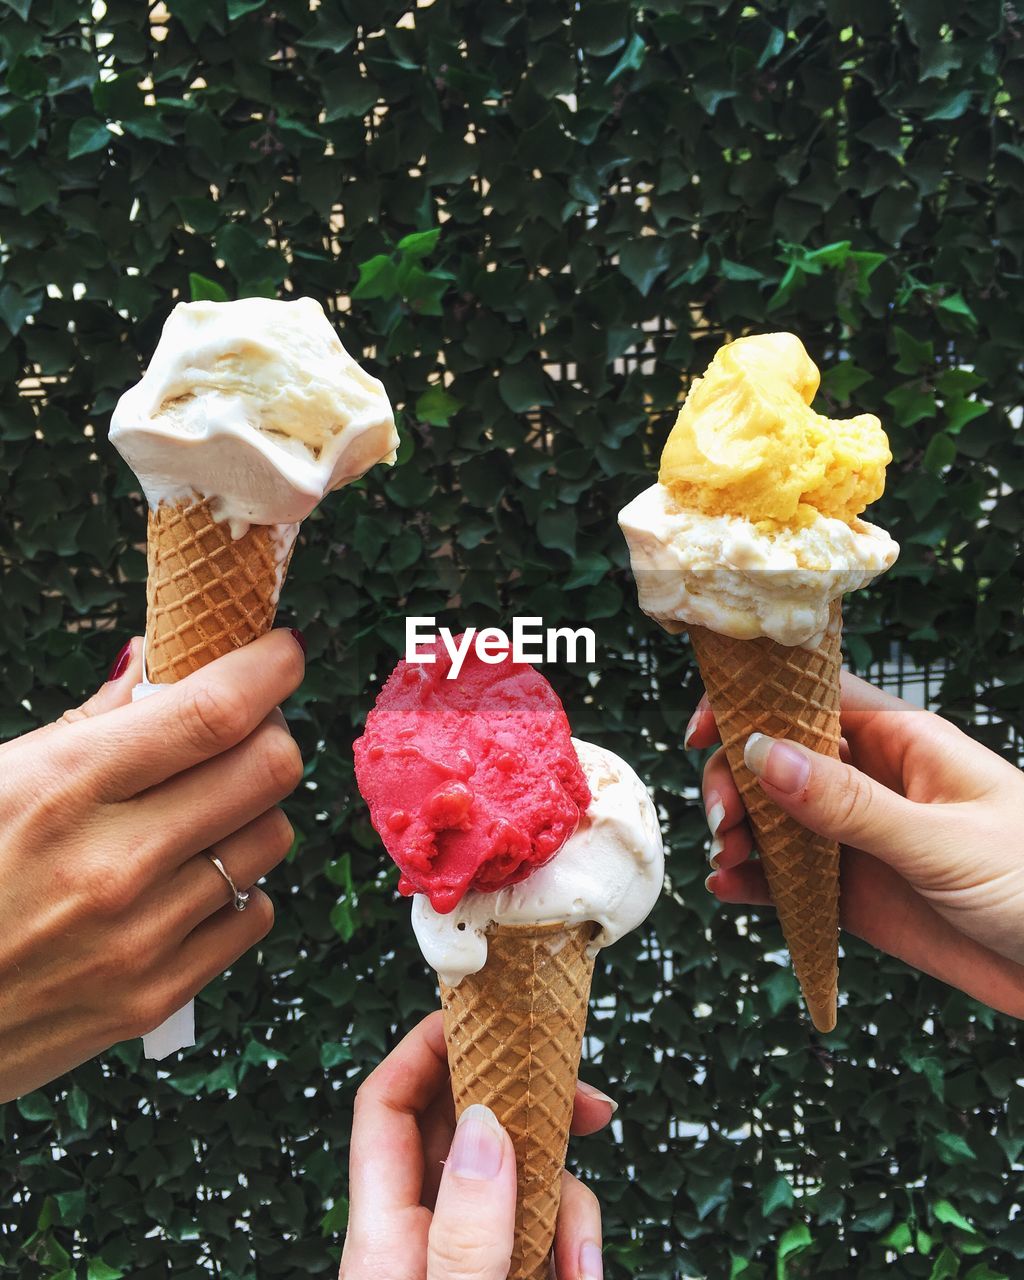 Human hands holding ice cream cones